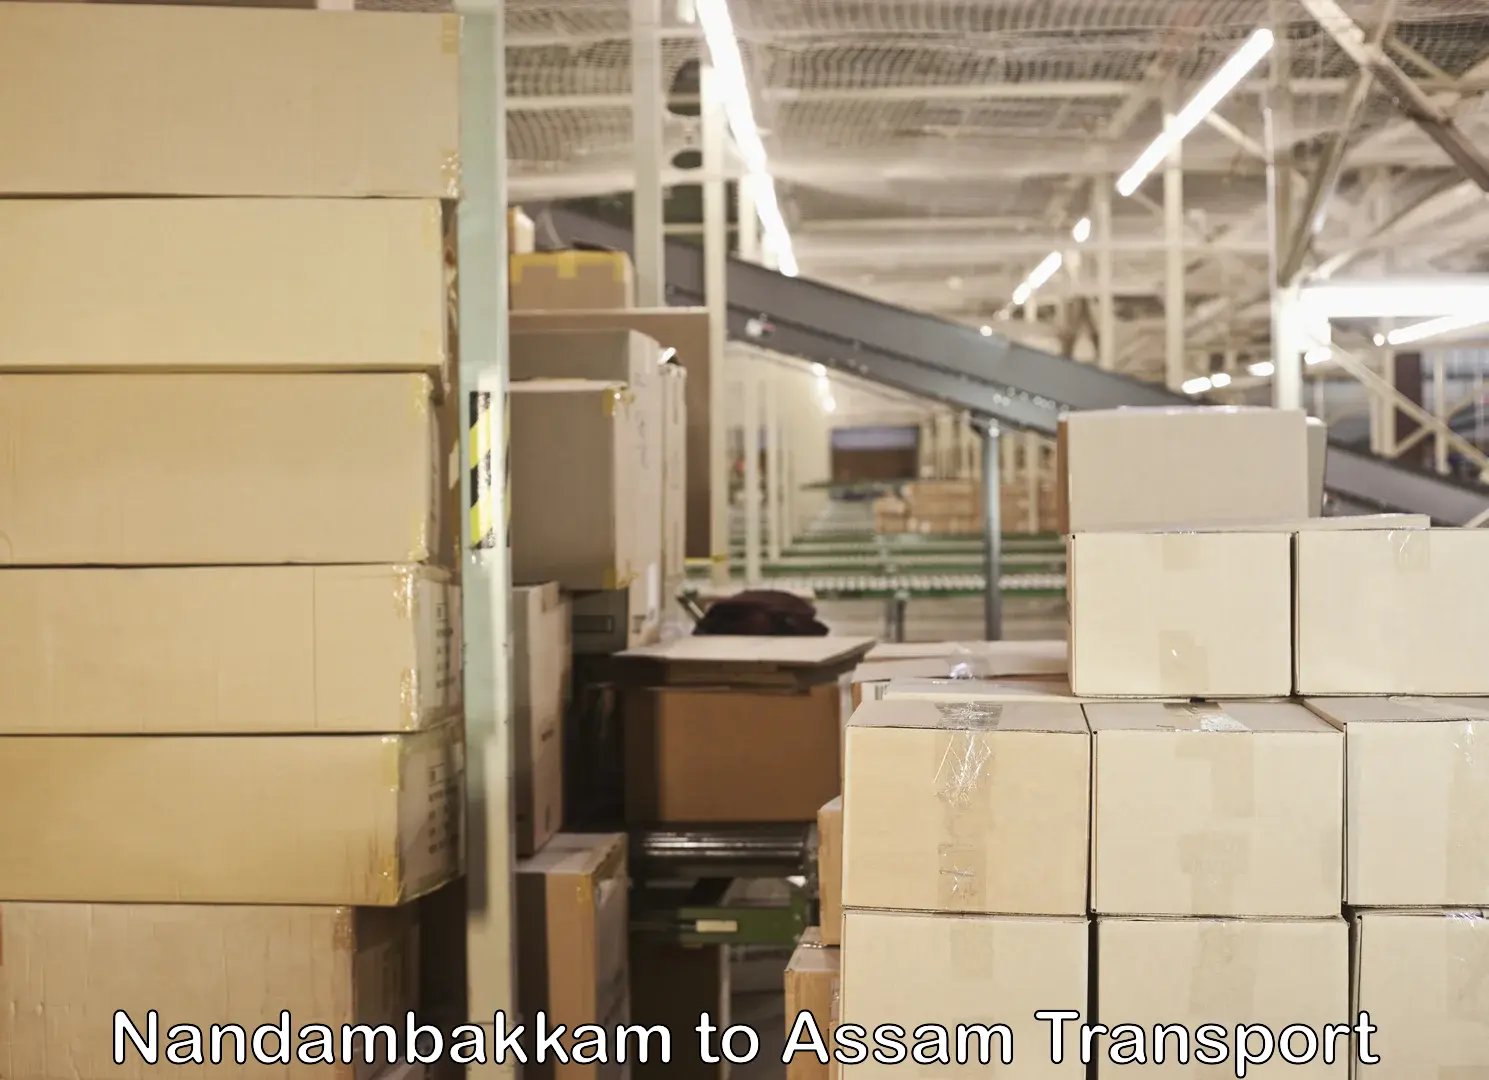 Truck transport companies in India Nandambakkam to Assam